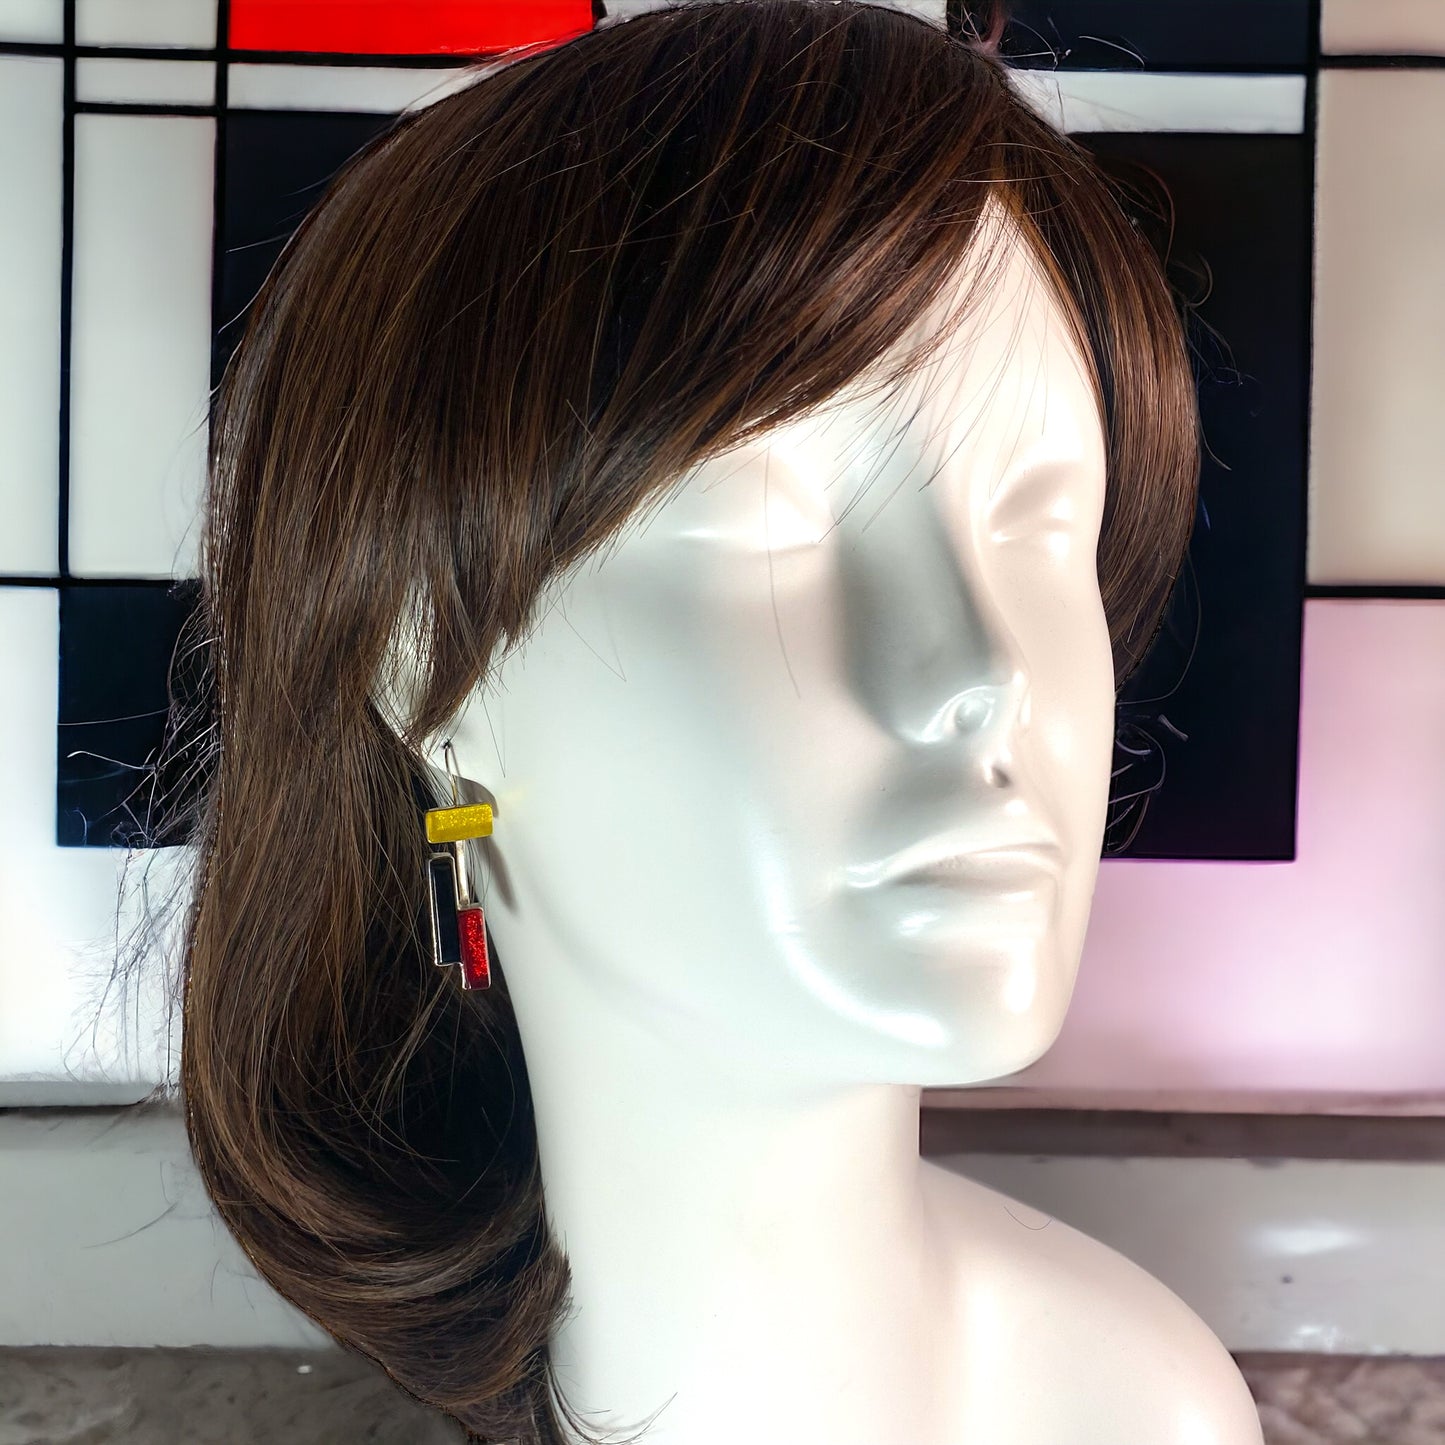 MCM Textile Earrings in Lemon, Black & Cherry Red